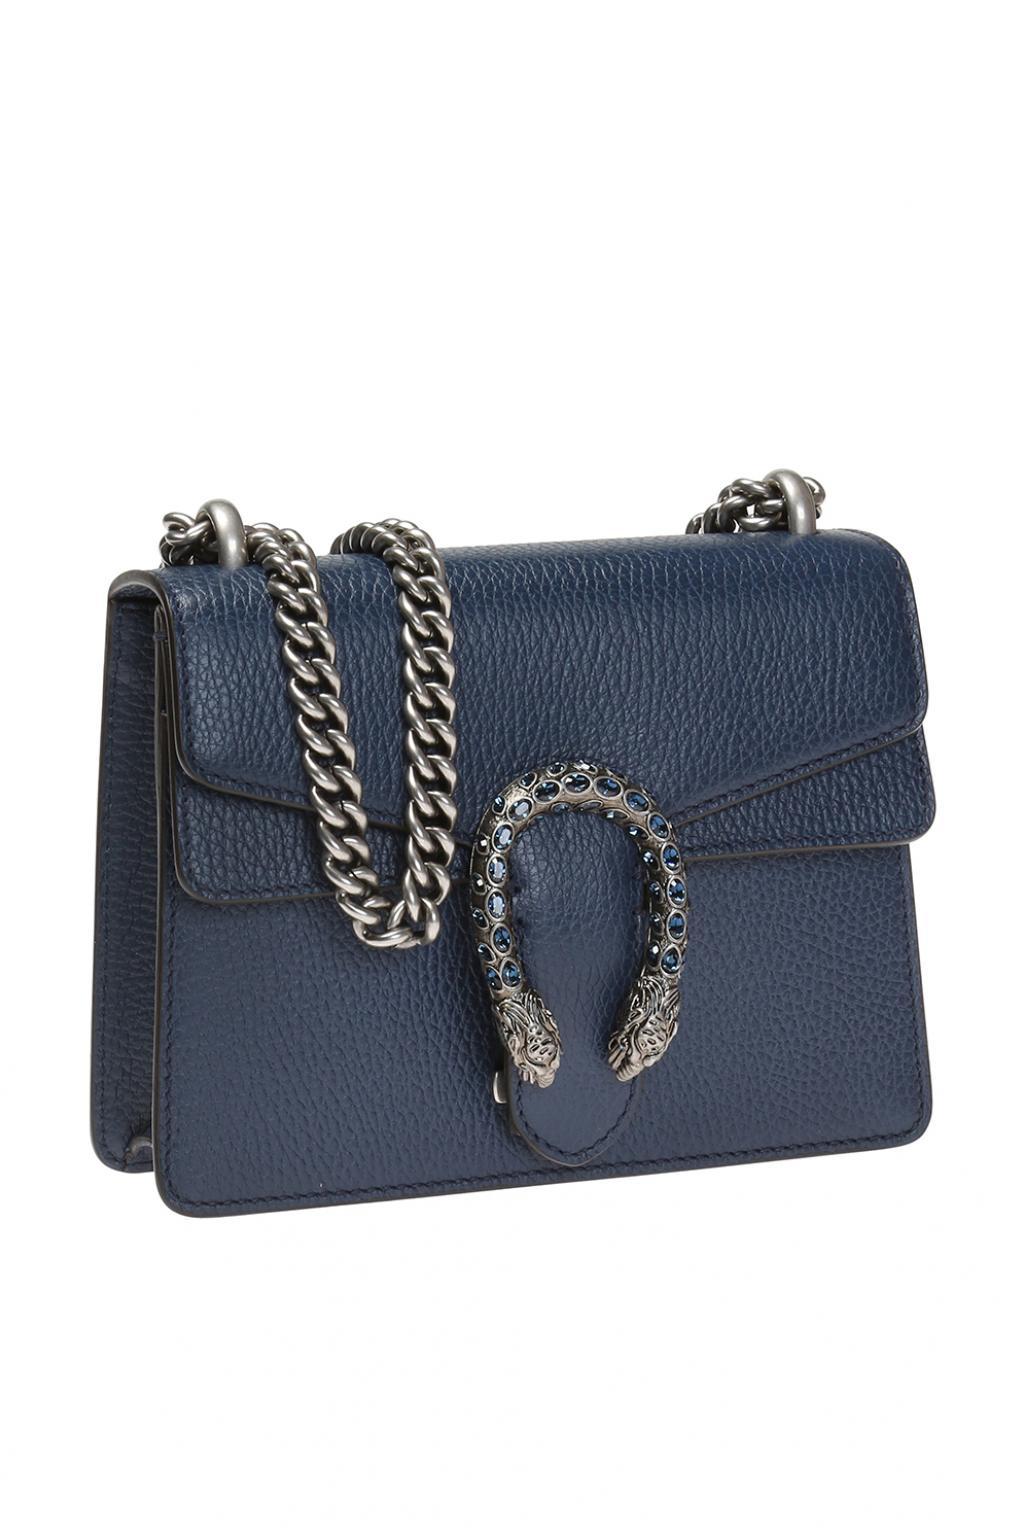 Gucci 'dionysus' Shoulder Bag in Blue | Lyst